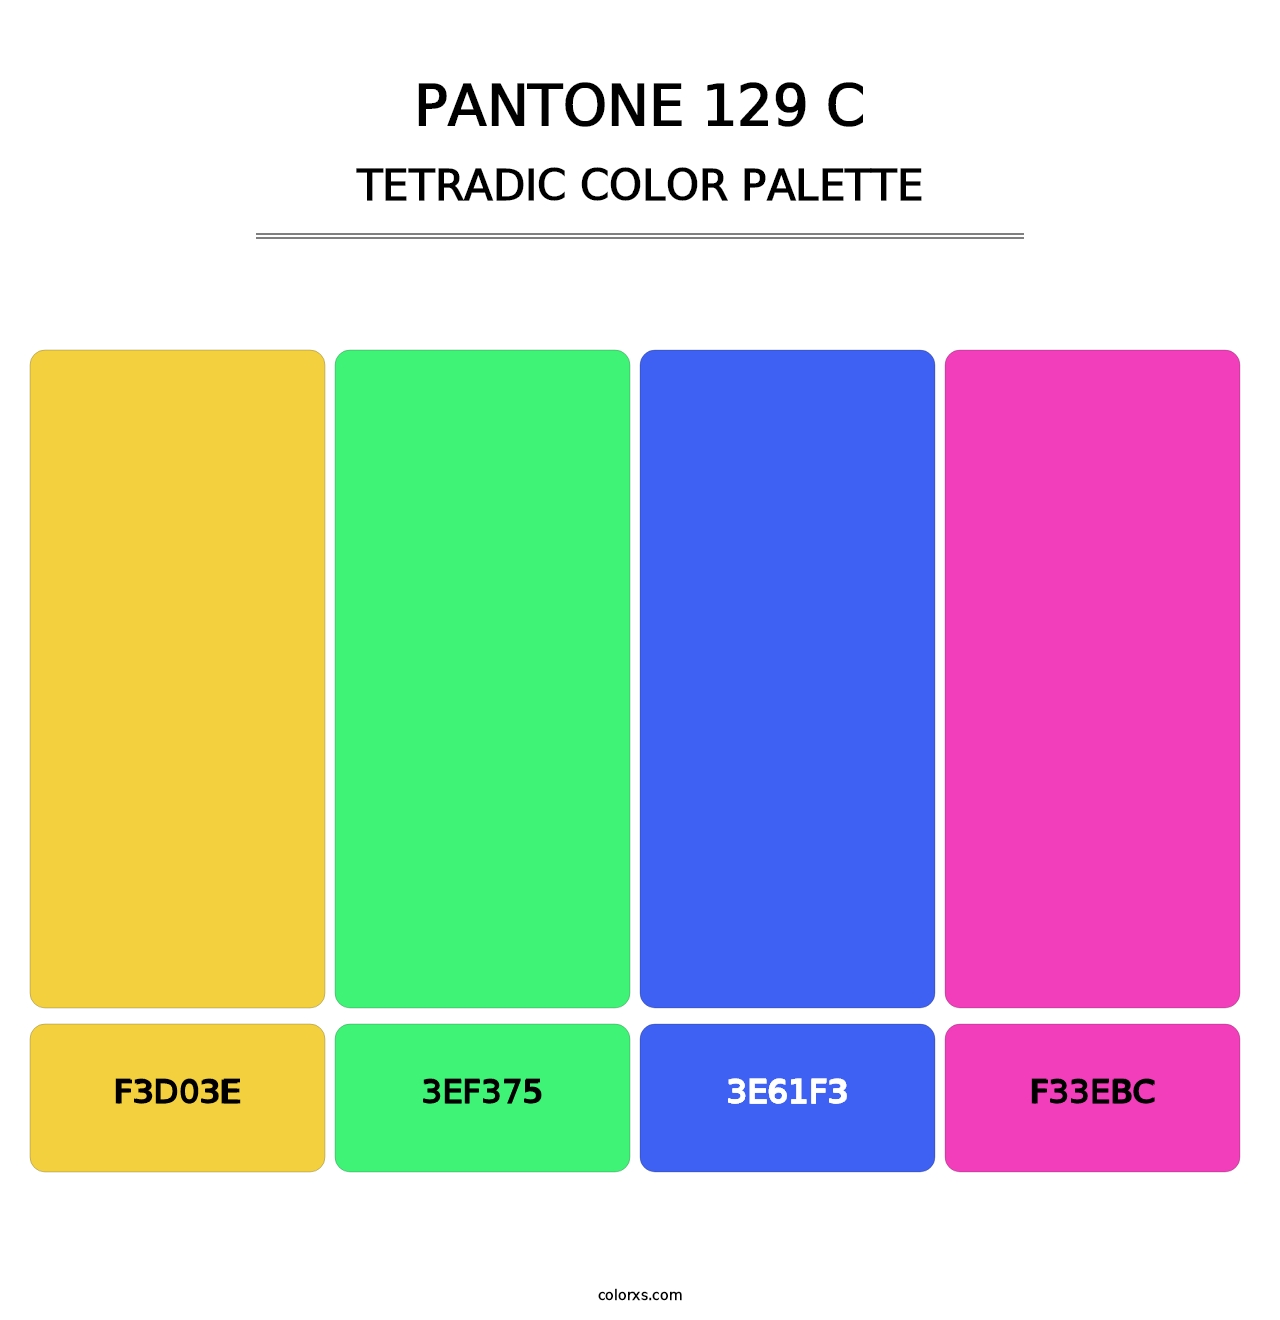 PANTONE 129 C - Tetradic Color Palette